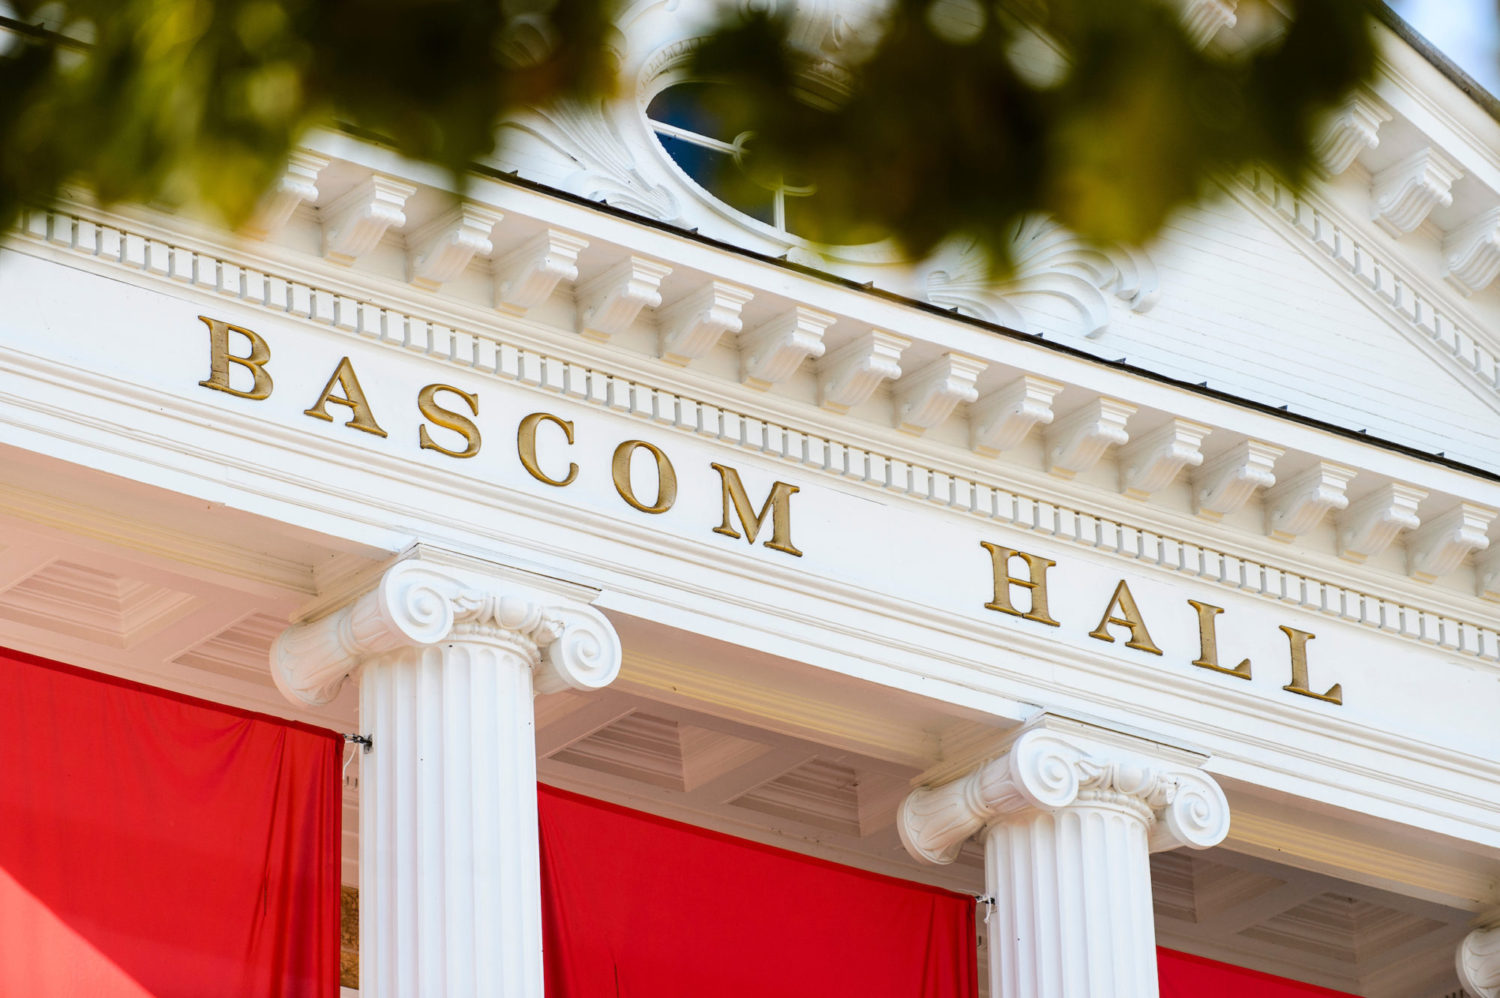 Bascom Hall sign displayed above columns on building.